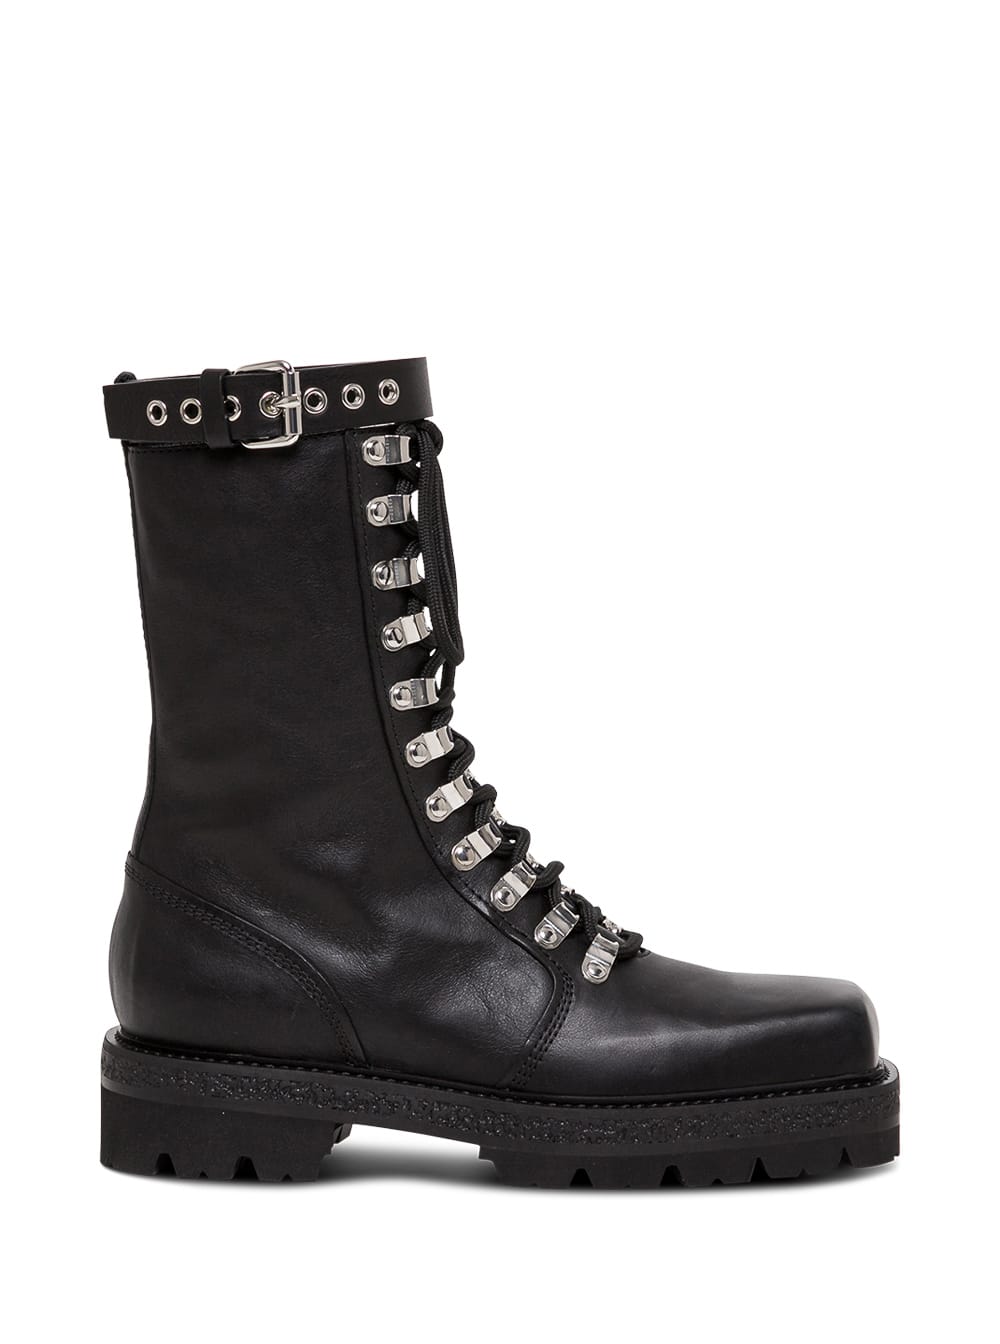 Philosophy di Lorenzo Serafini Black Leather Boots With Metal Hooks